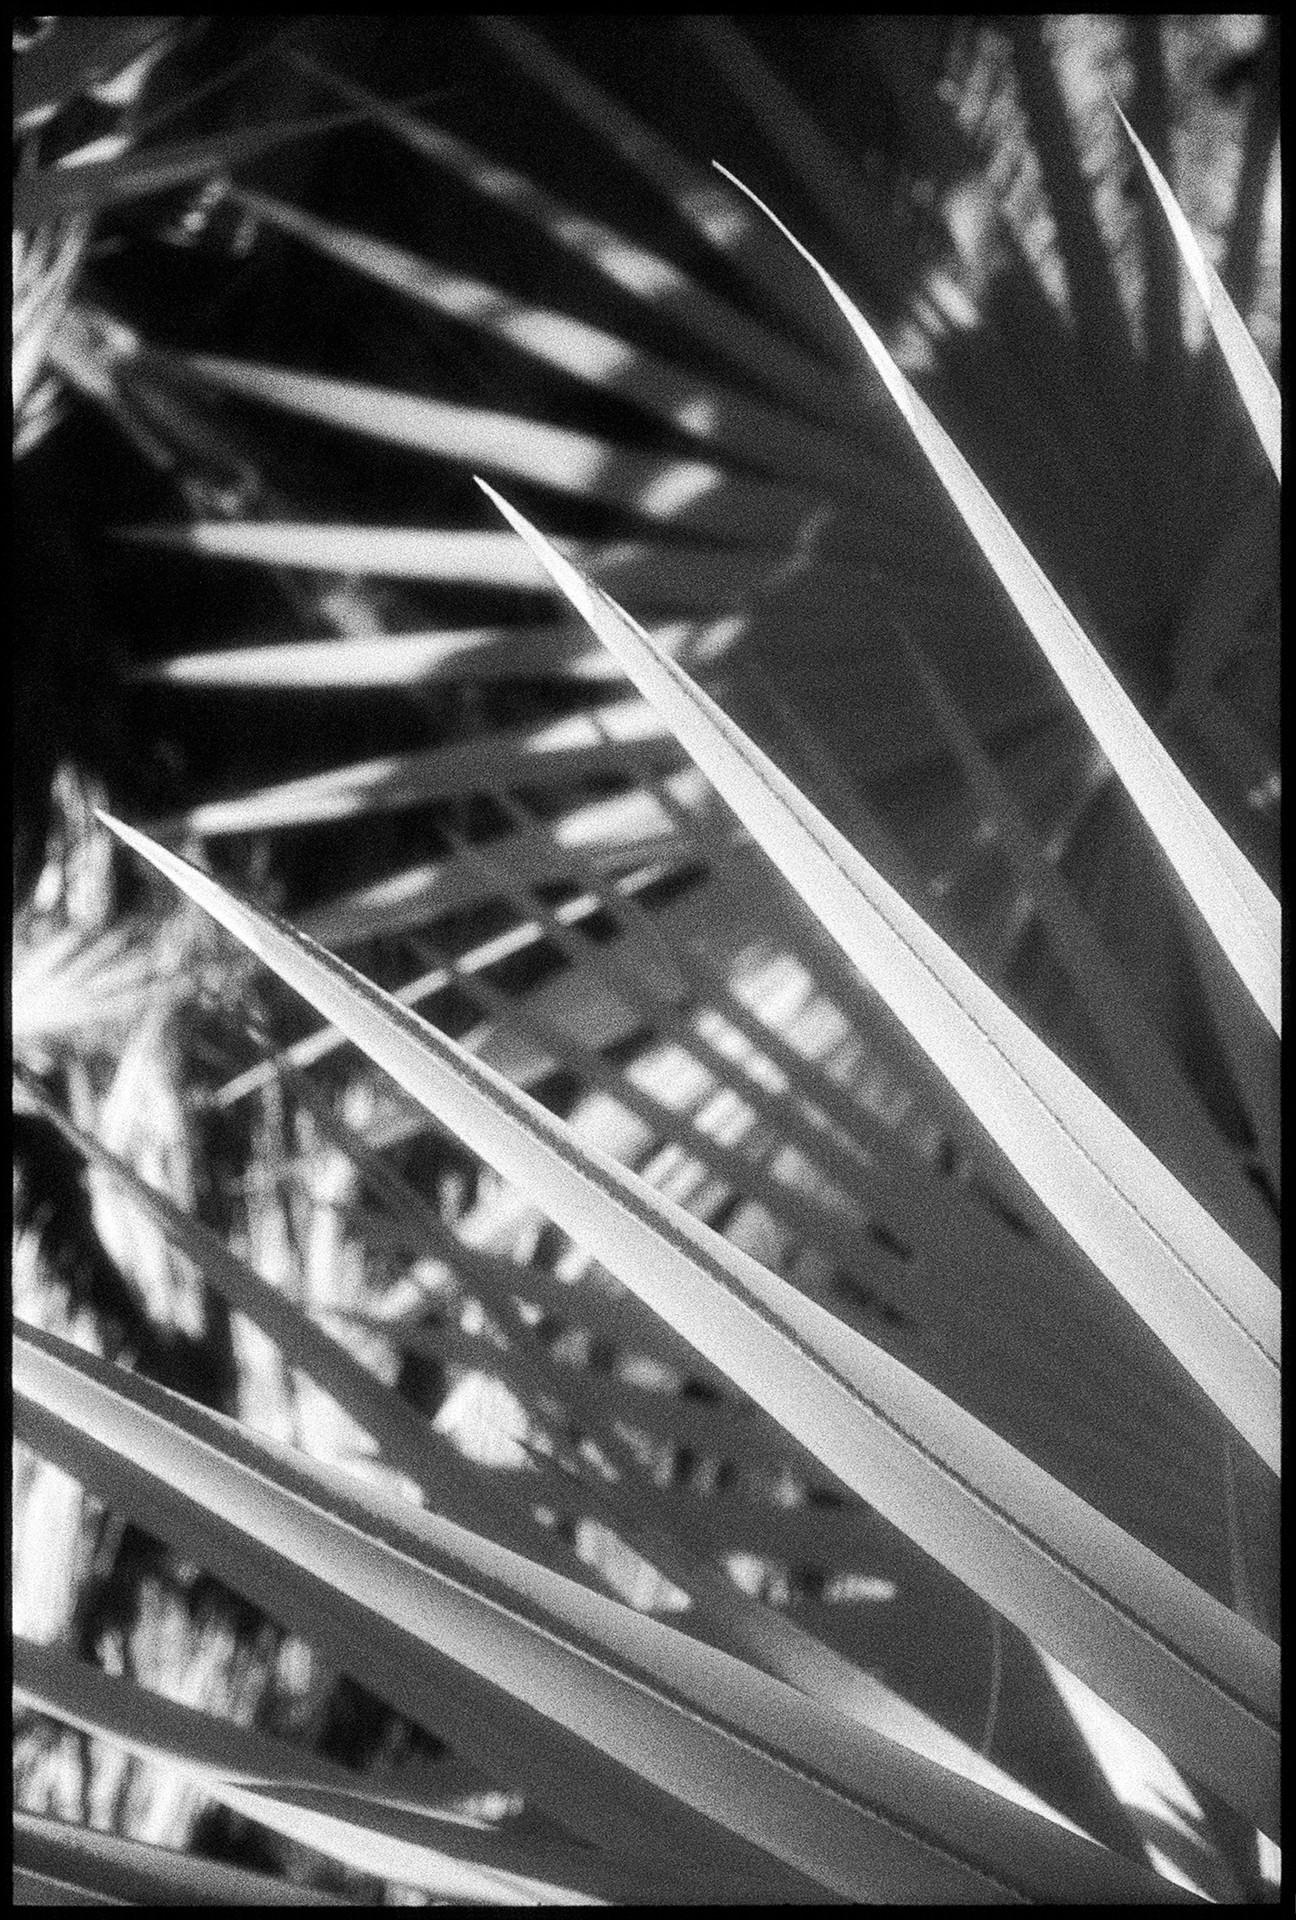 Edward Alfano Landscape Photograph - Huntington Gardens LXI, San Marino, CA - Contemporary Pigment Print (Black+White